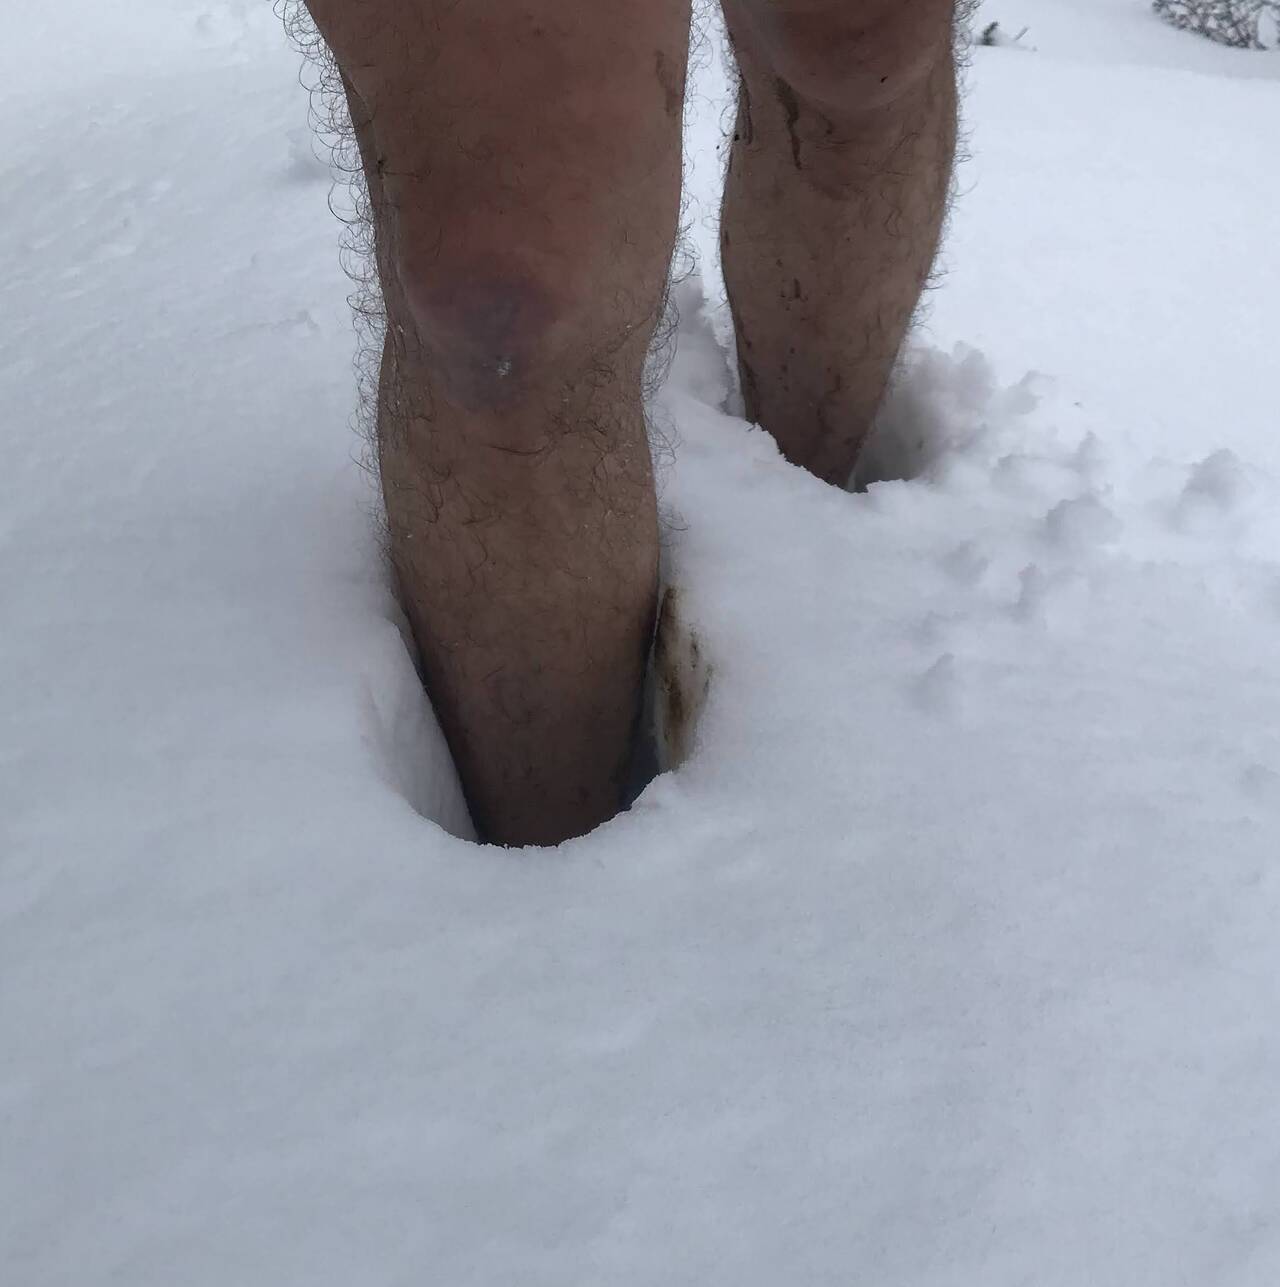 Two feet buried in mid-shin-depth snow